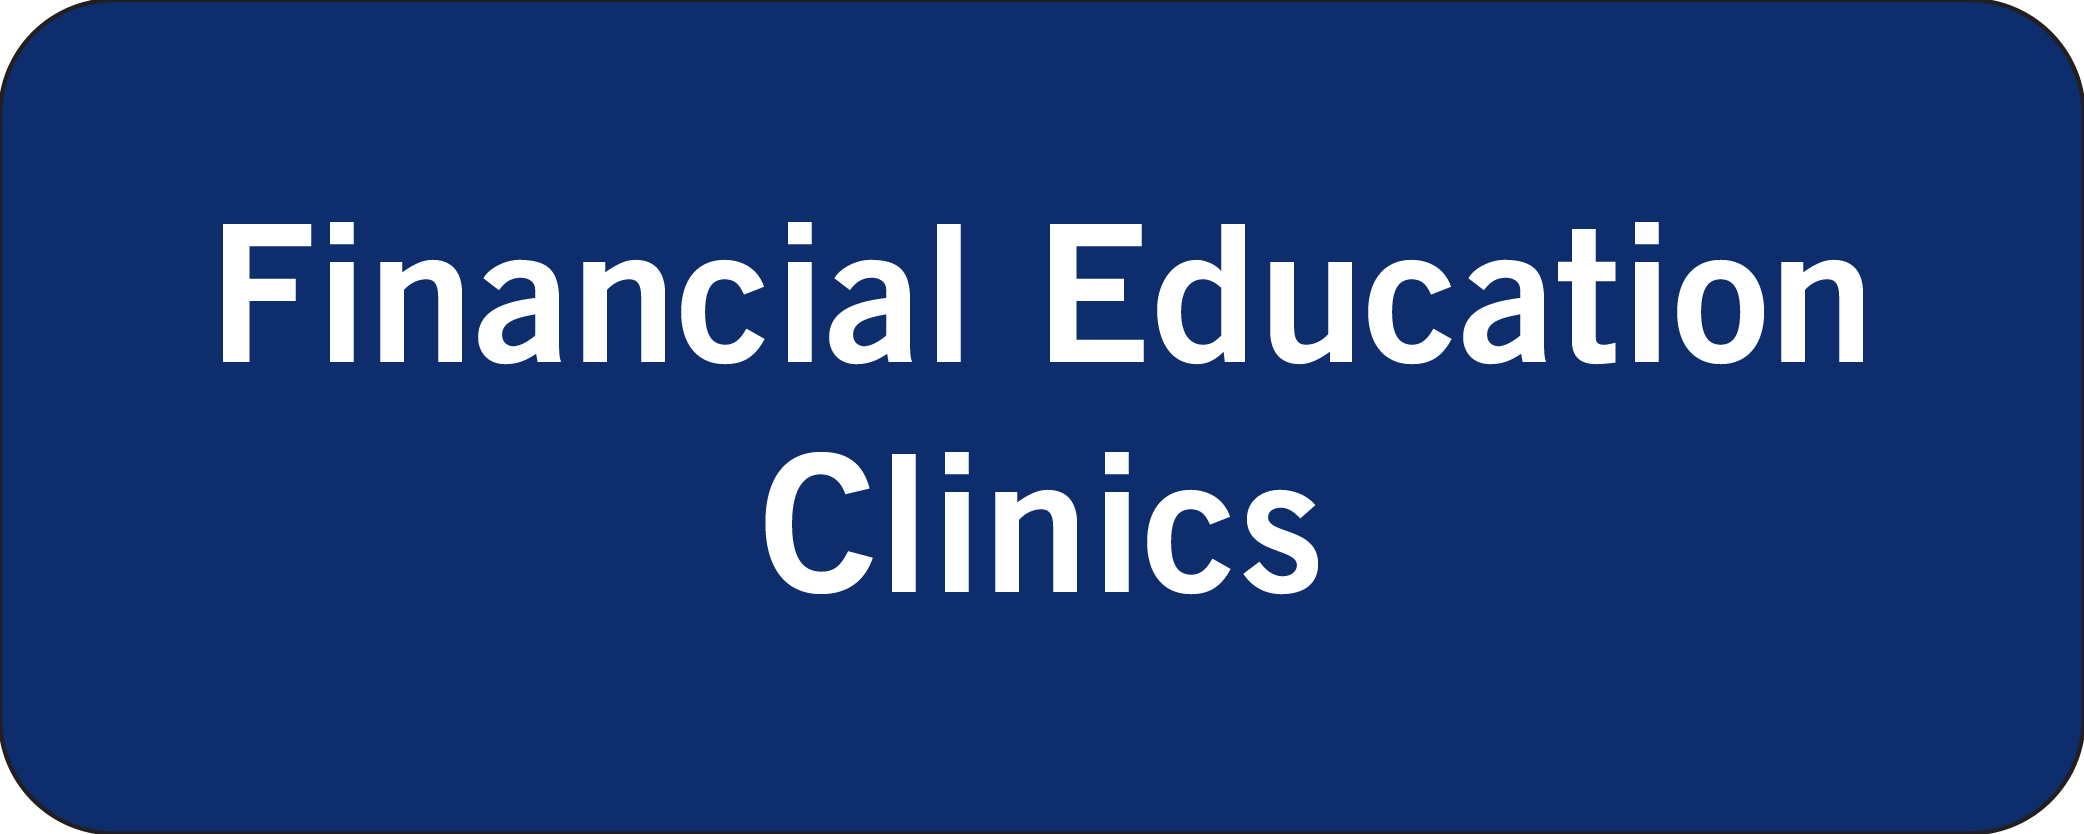 Financial education clinics